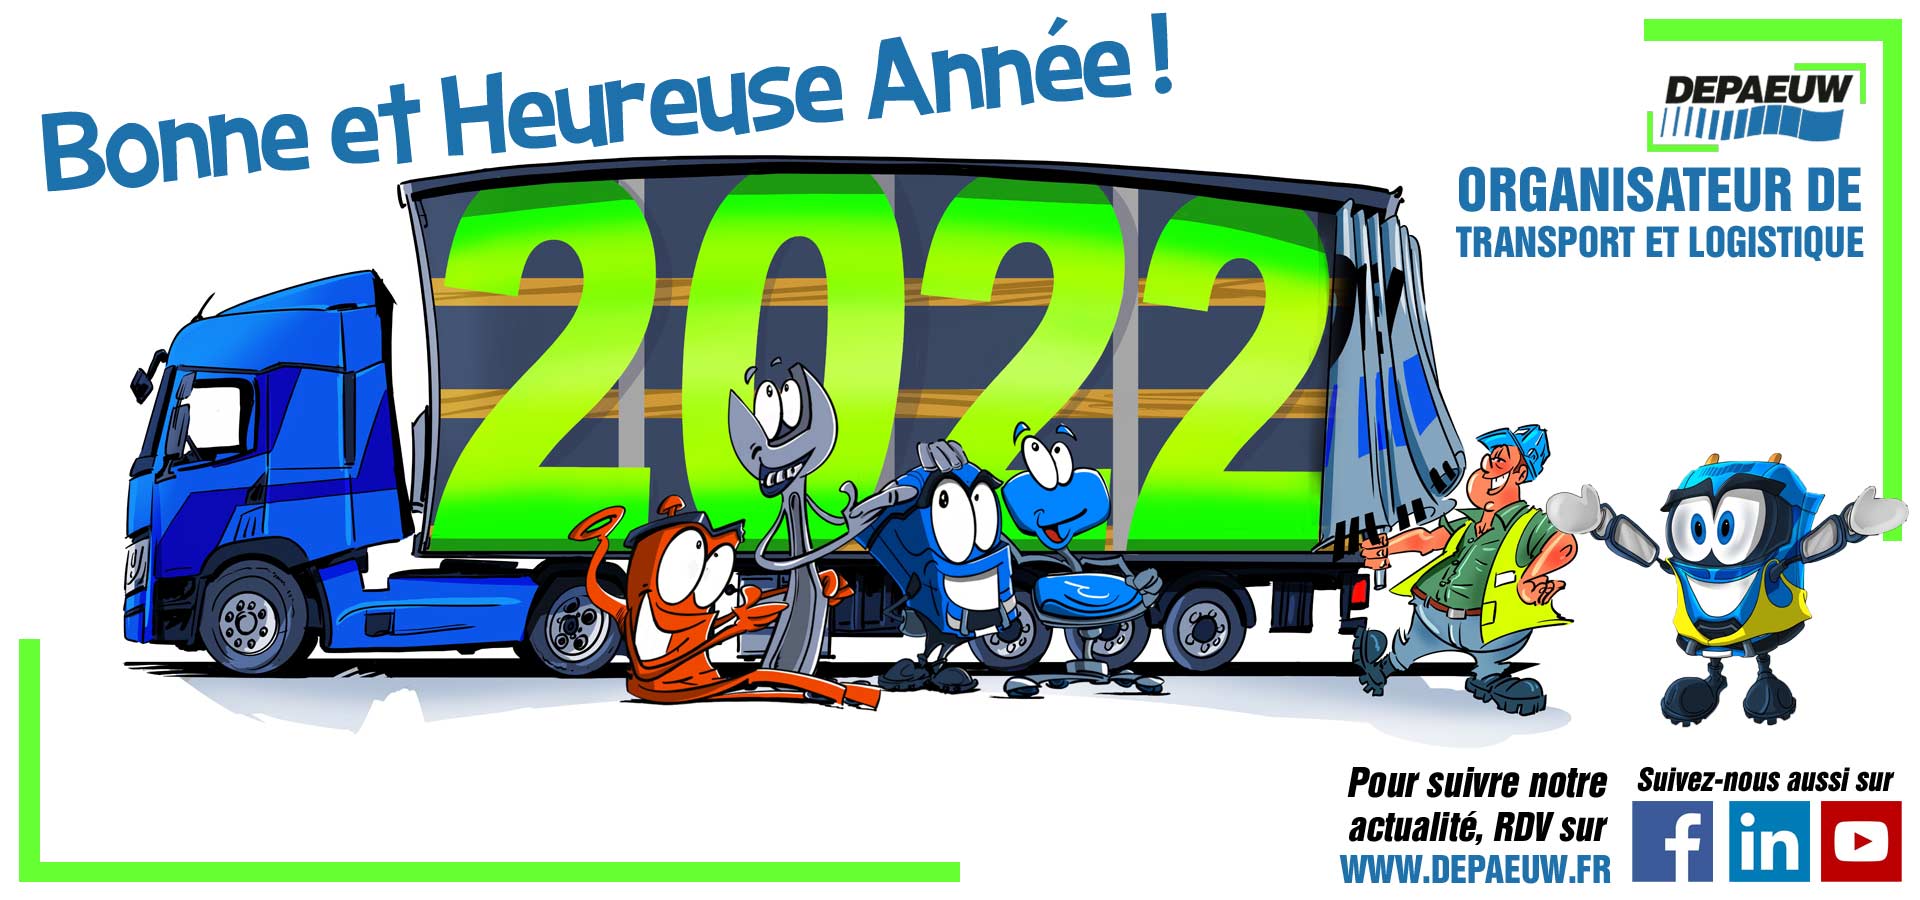 bonne-annee-2022